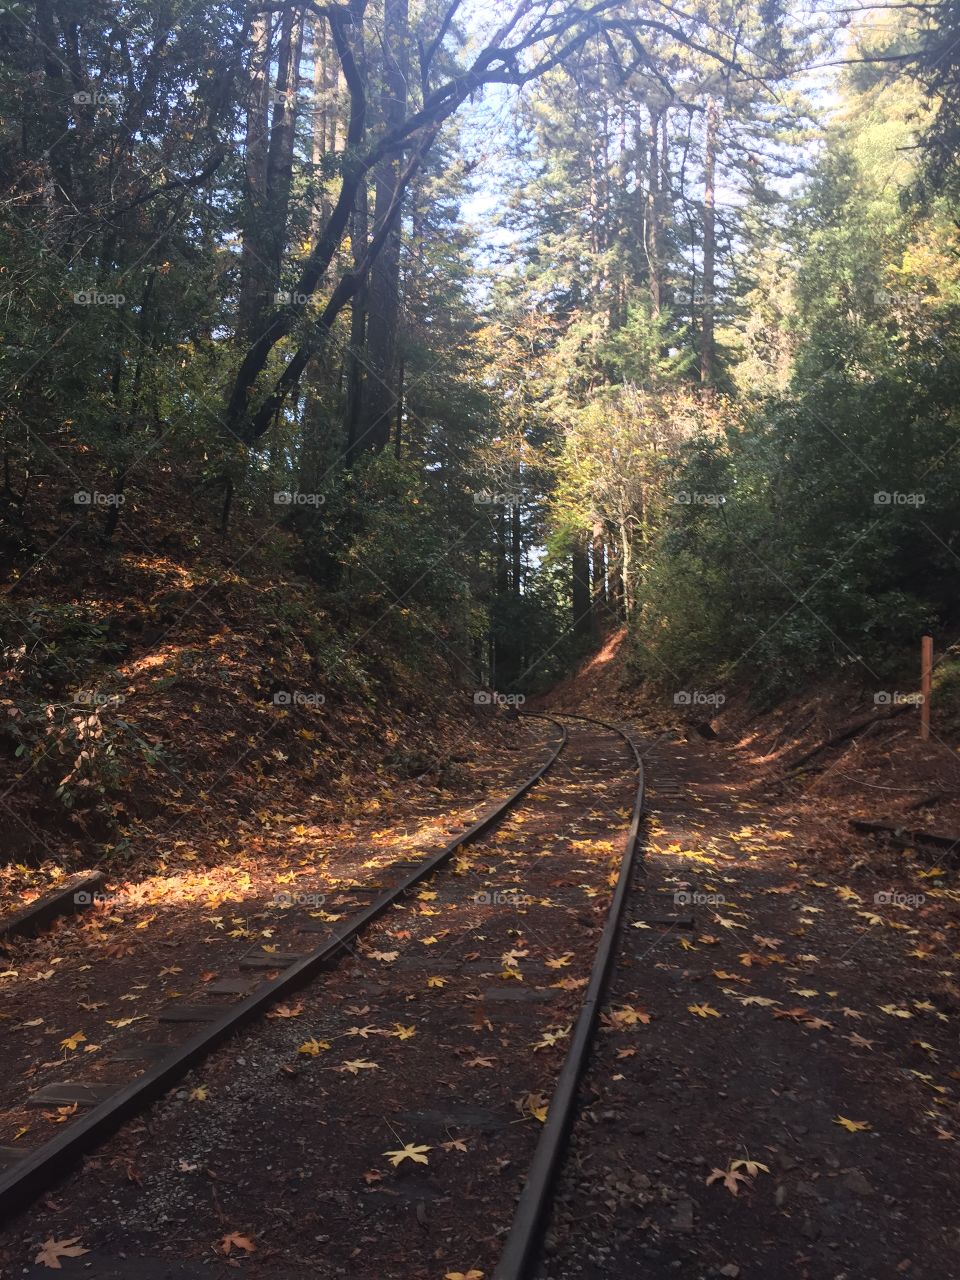 Abandoned train tracks